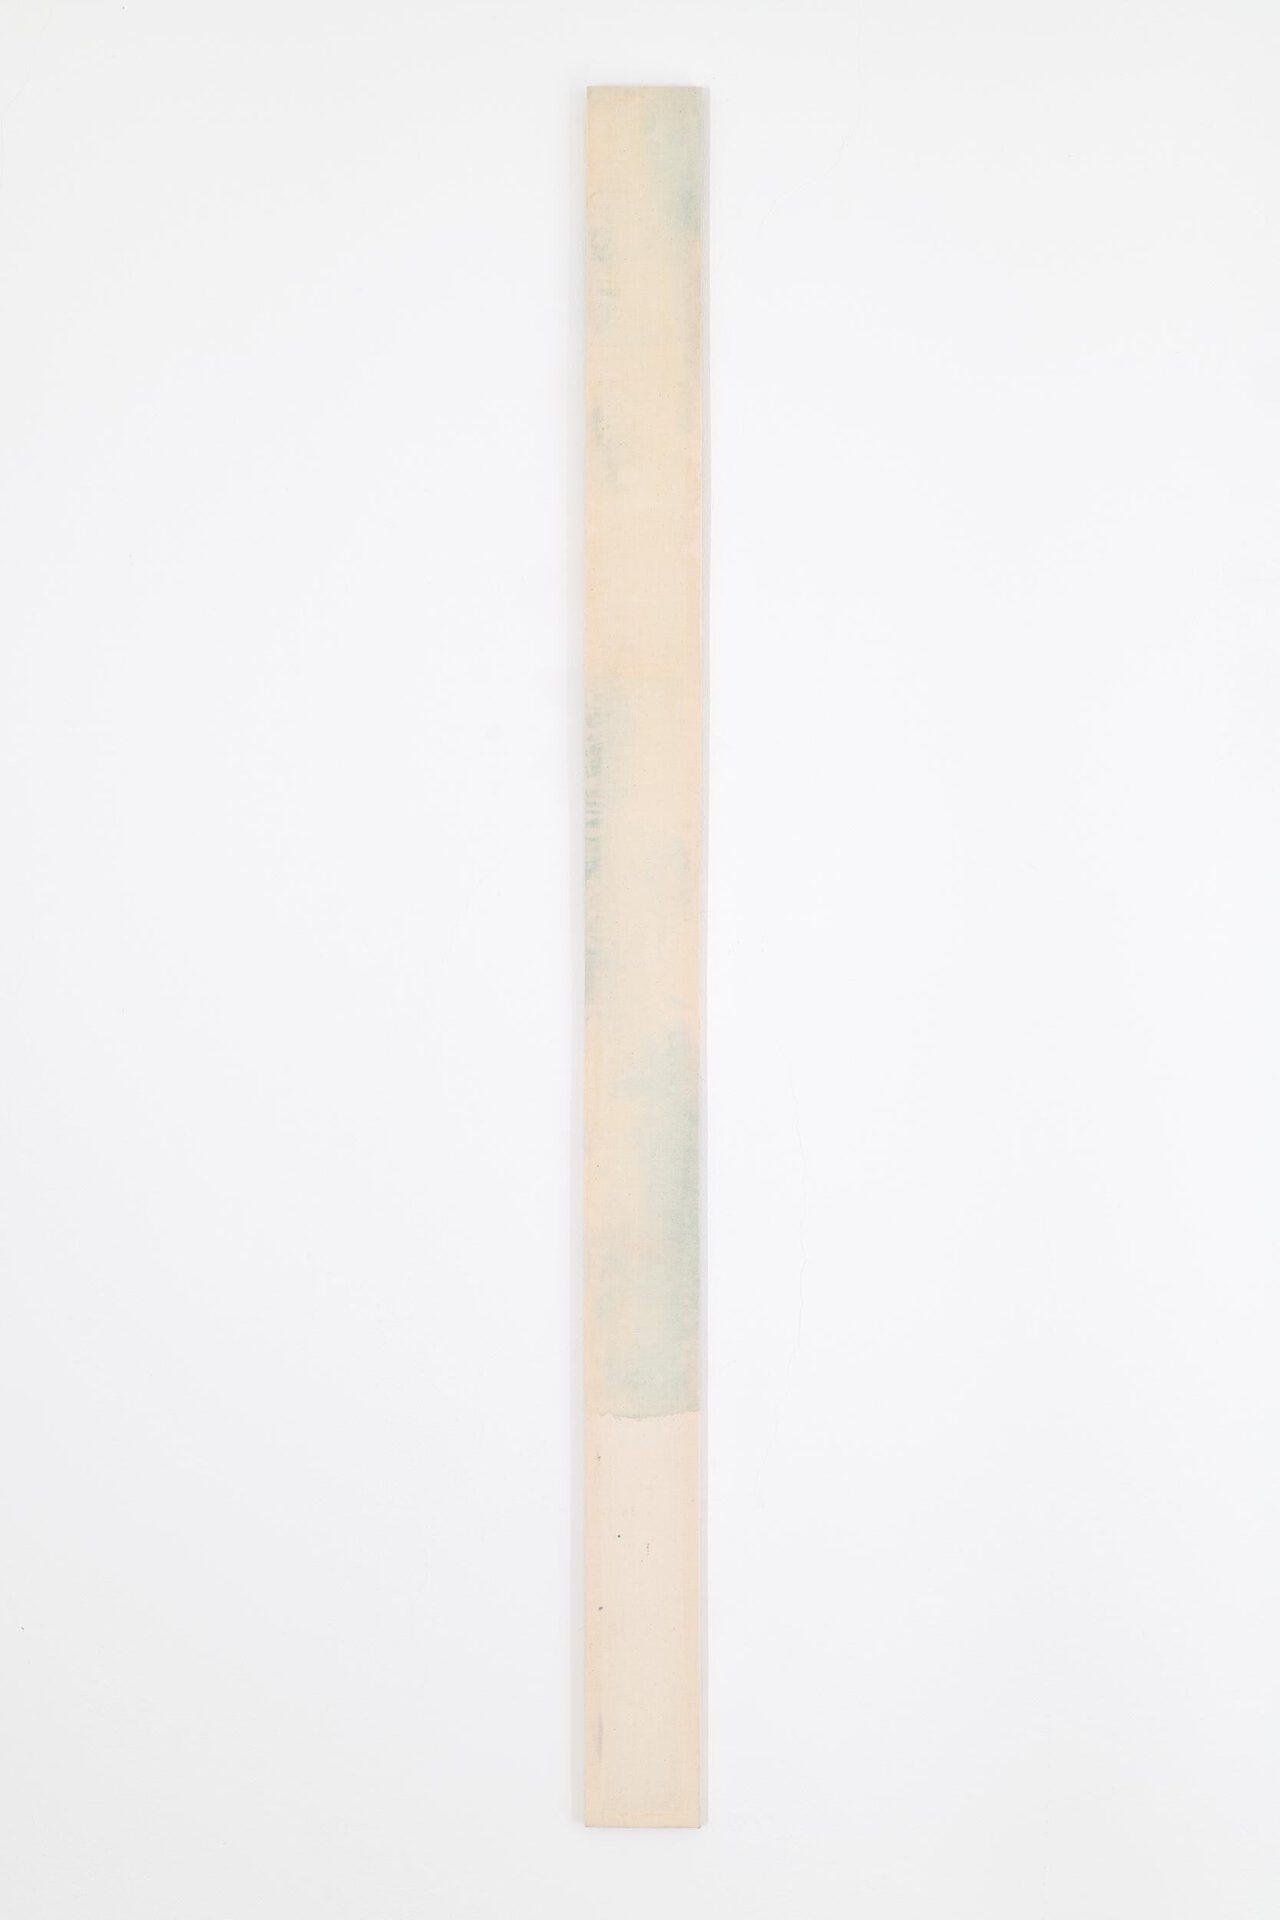 Axel Koschier, 7, 2021, watercolour, cotton, wood, 150 × 10 cm